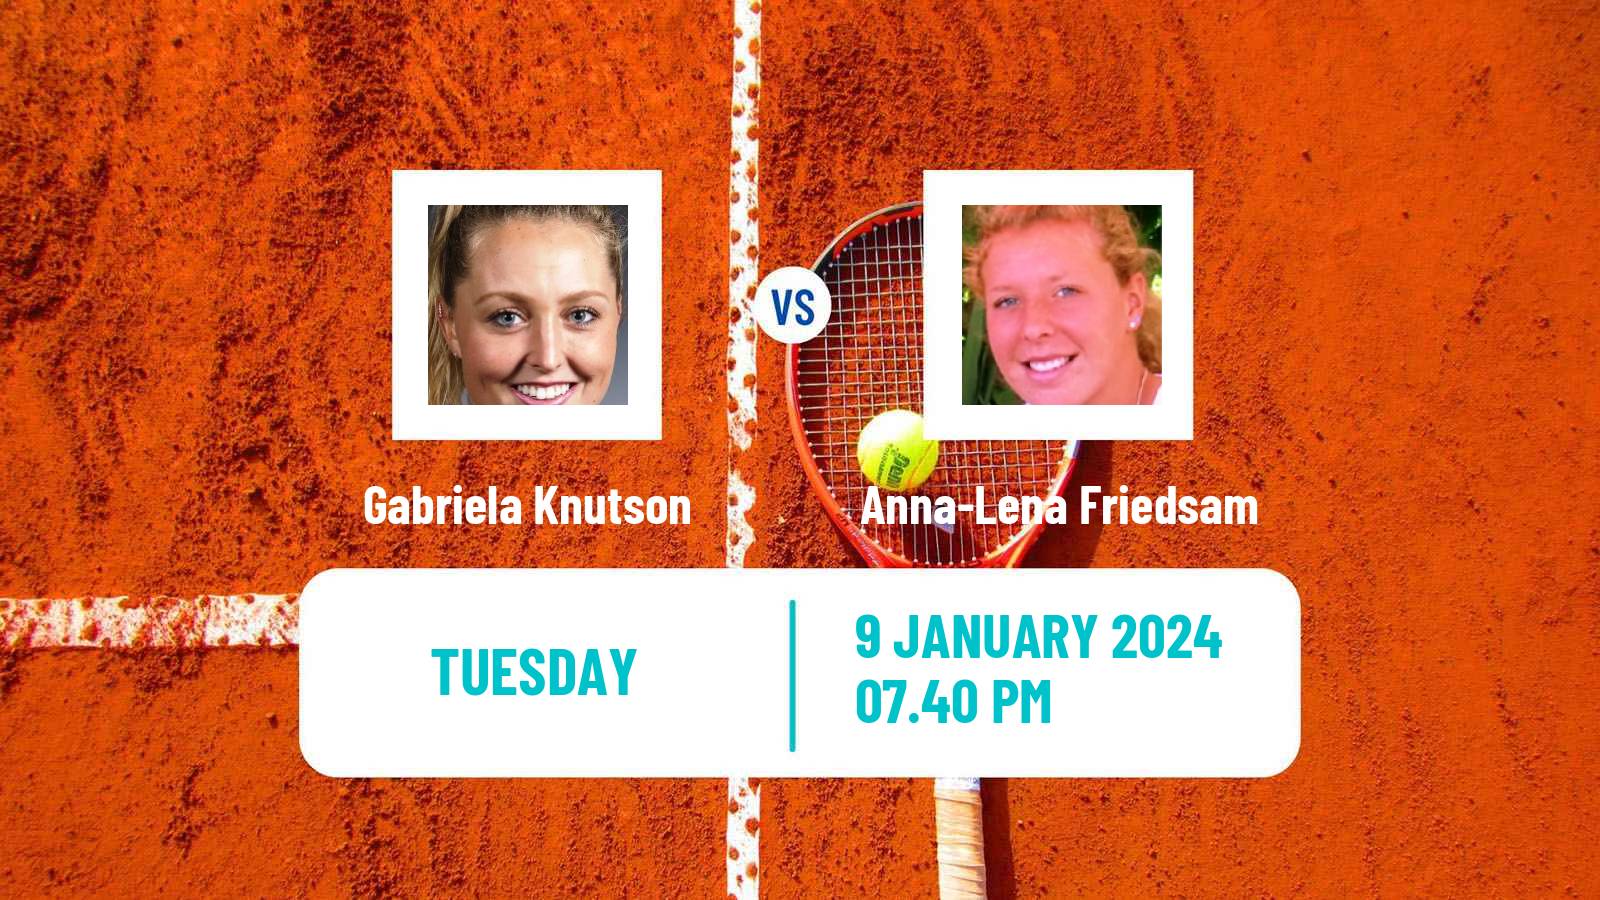 Tennis WTA Australian Open Gabriela Knutson - Anna-Lena Friedsam